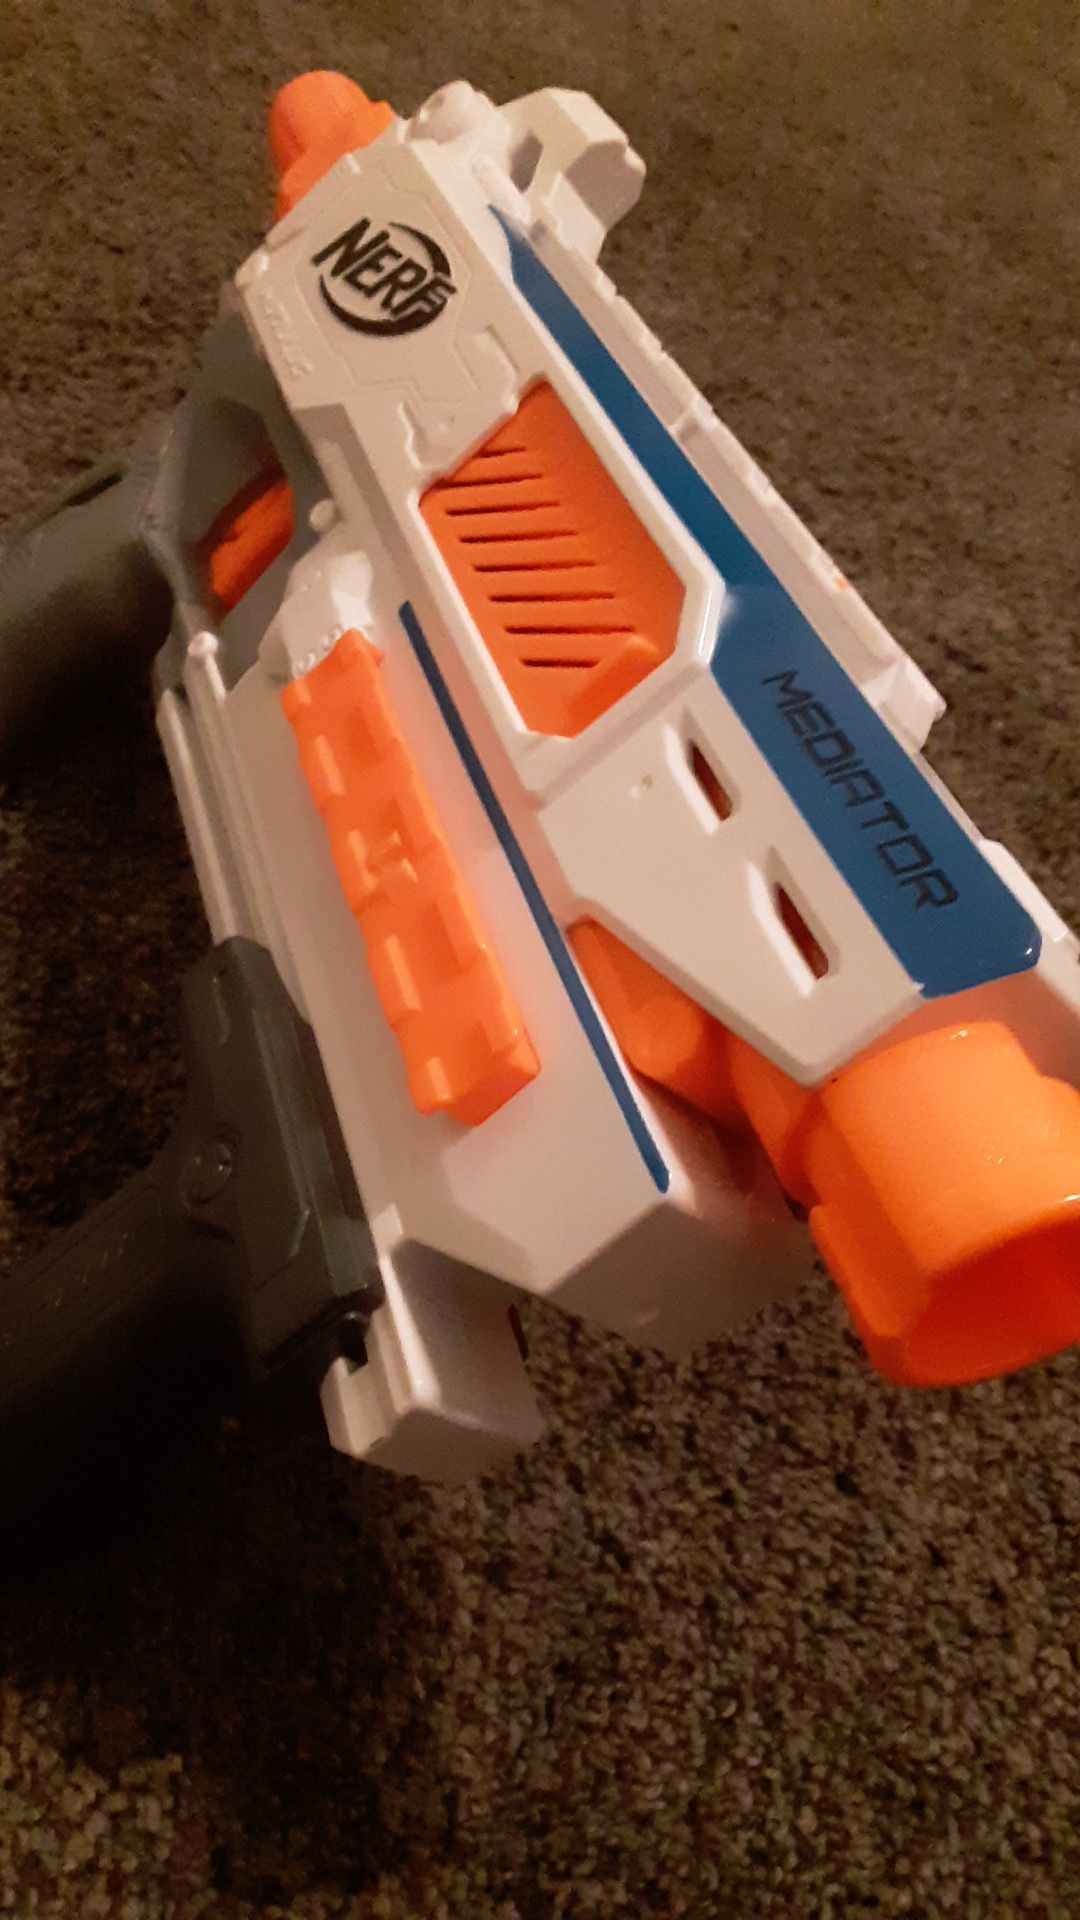 Nerf gun with 12 round magazine